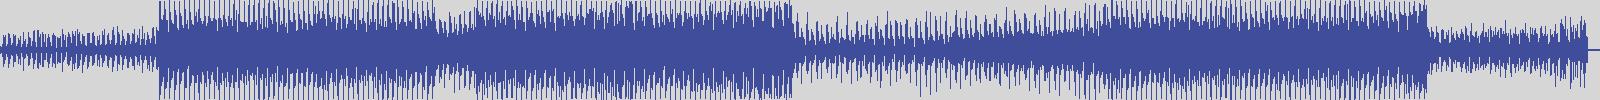 nf_boyz_records [NFY073] Jeff Knight - Ipno Stories [Jaguar Mix] audio wave form